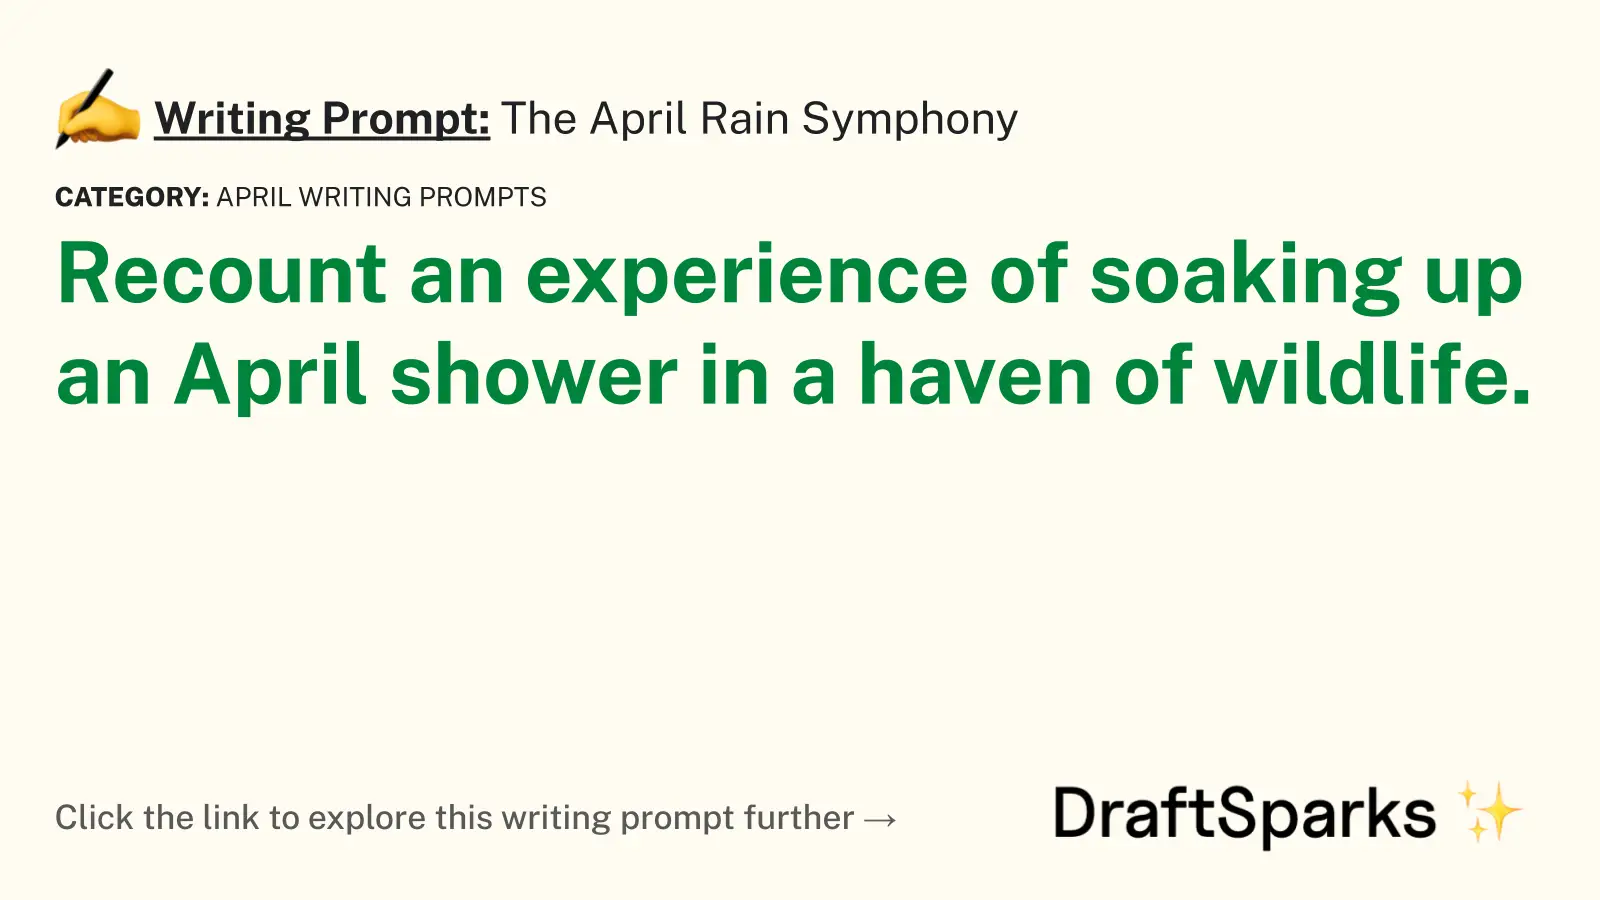 The April Rain Symphony